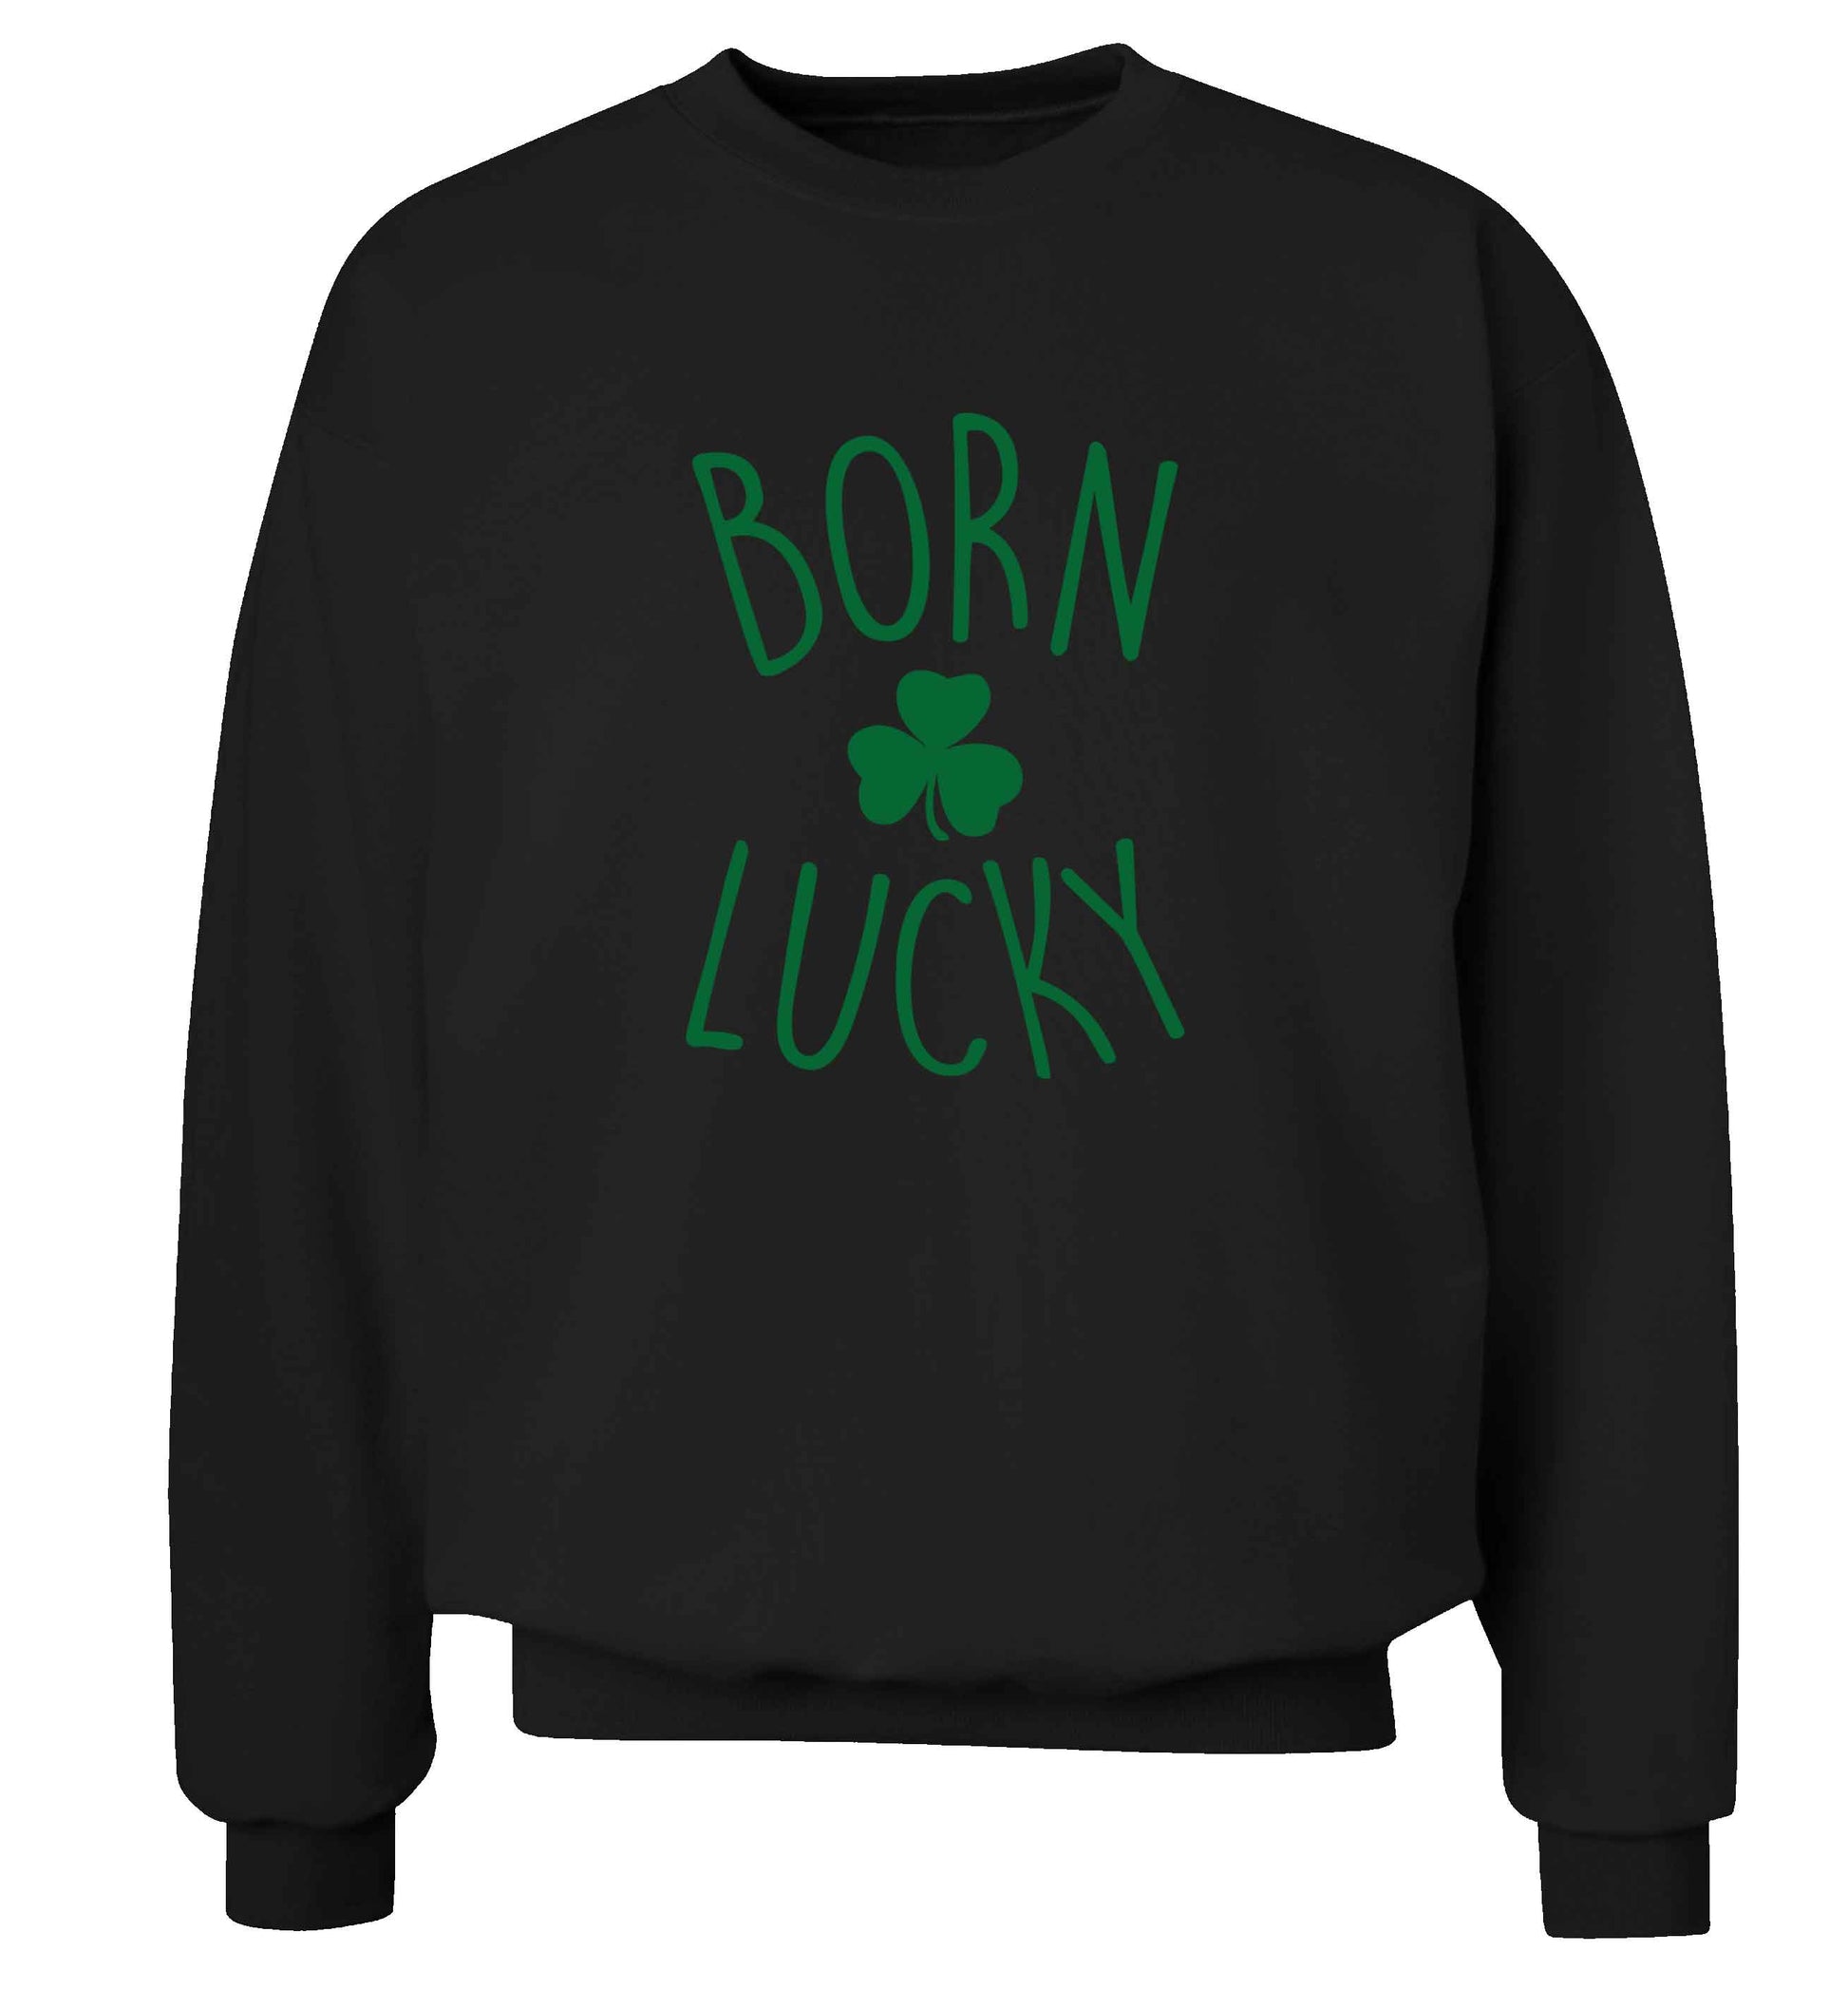 Born Lucky adult's unisex black sweater 2XL